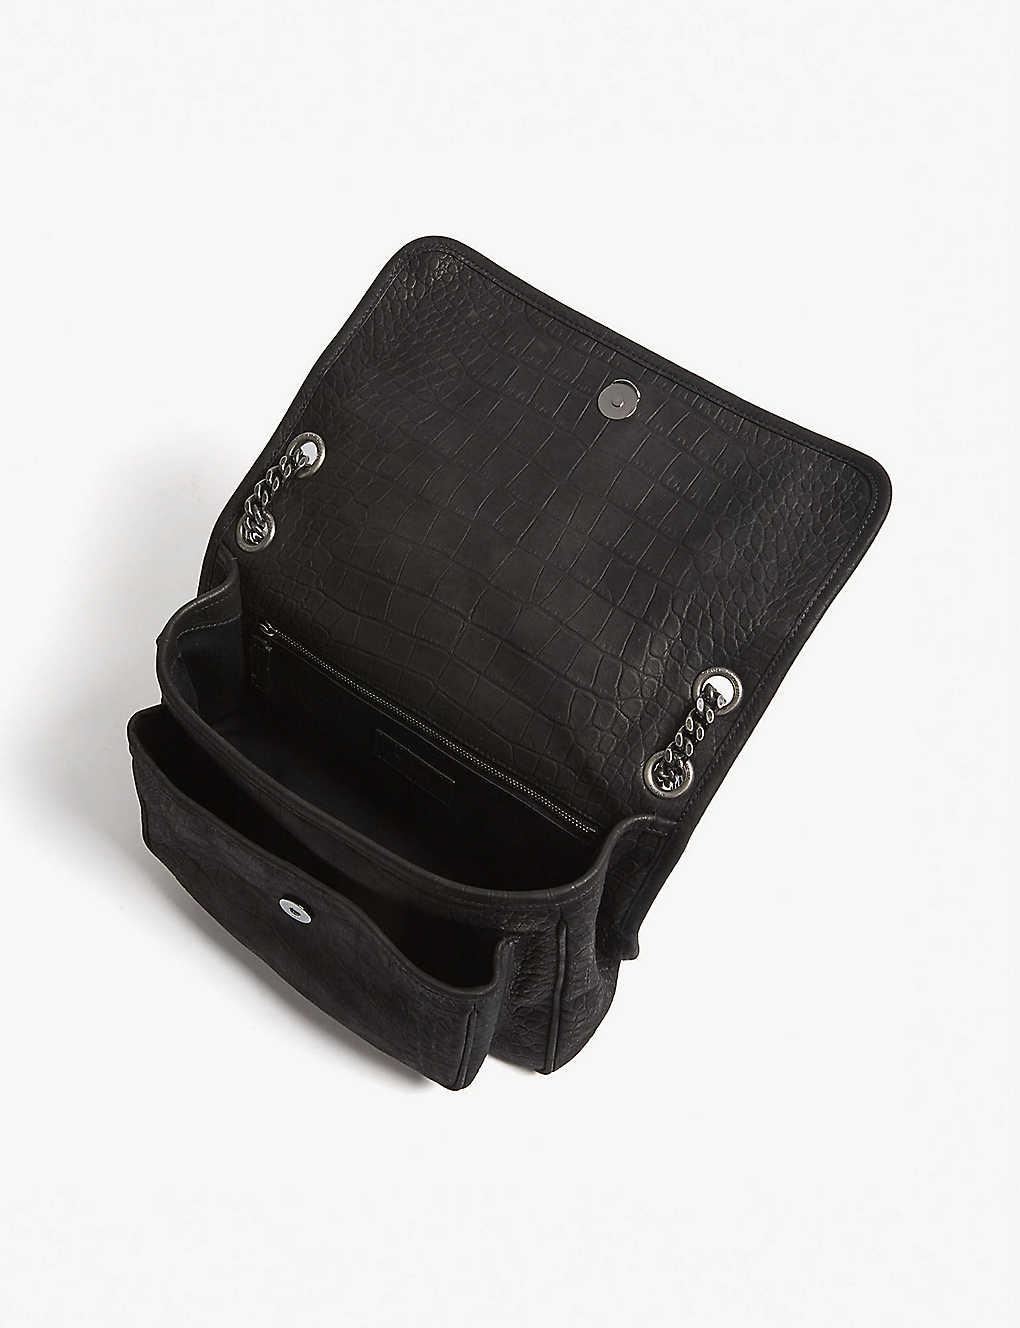 Saint Laurent Monogram Niki Medium Matte Leather Shoulder Bag in